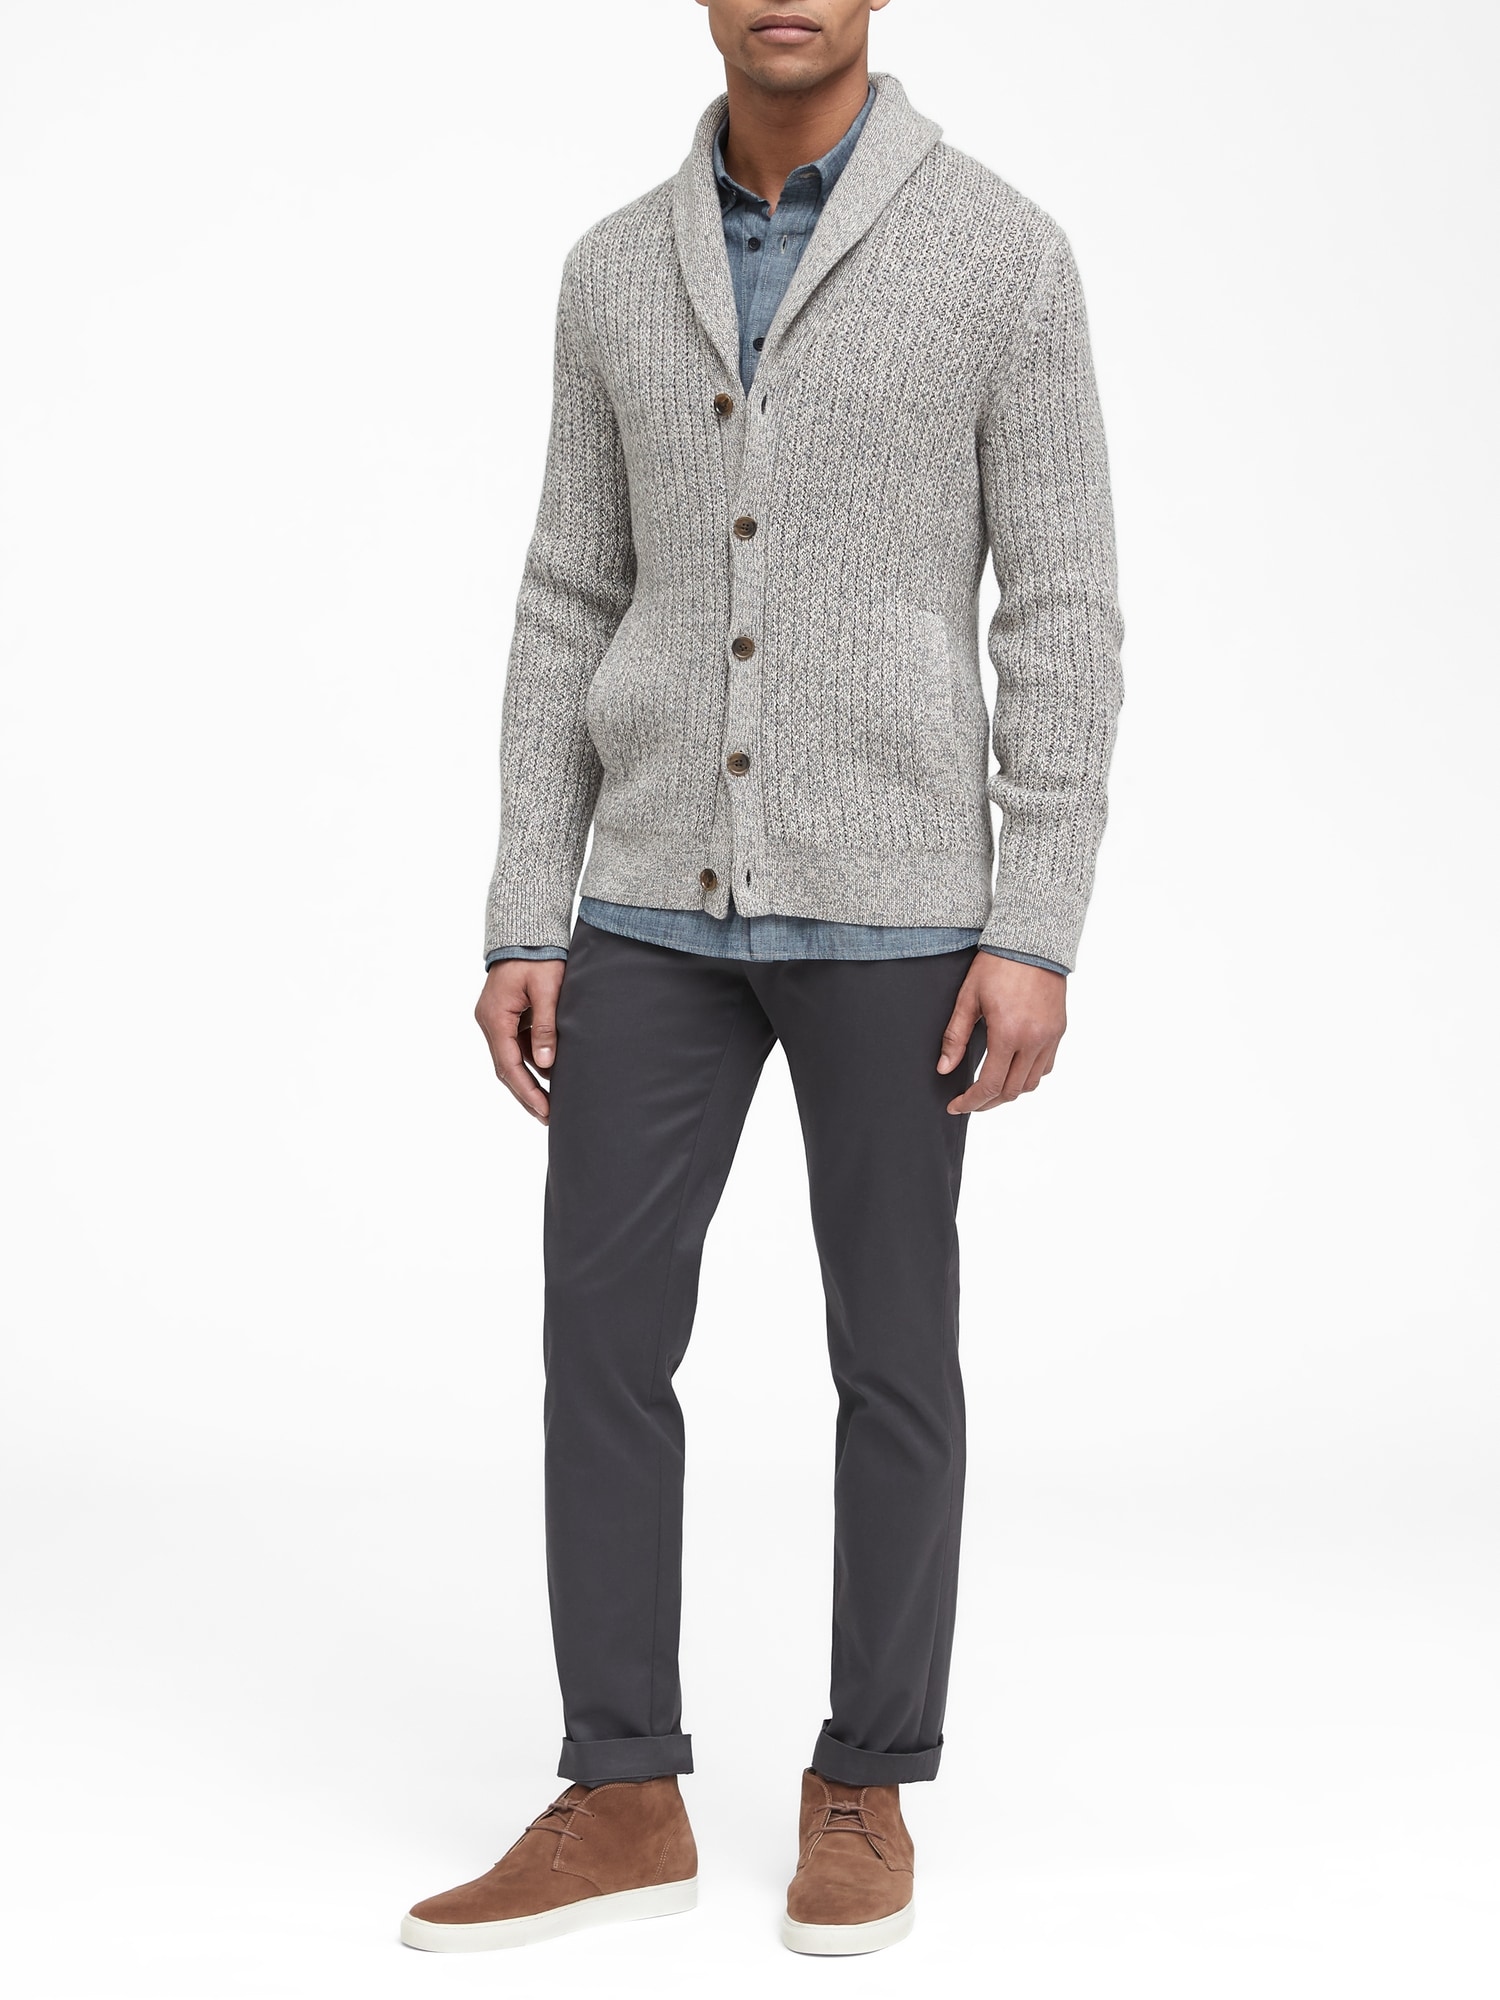 Cotton Cardigan Sweater Shawl Blouse